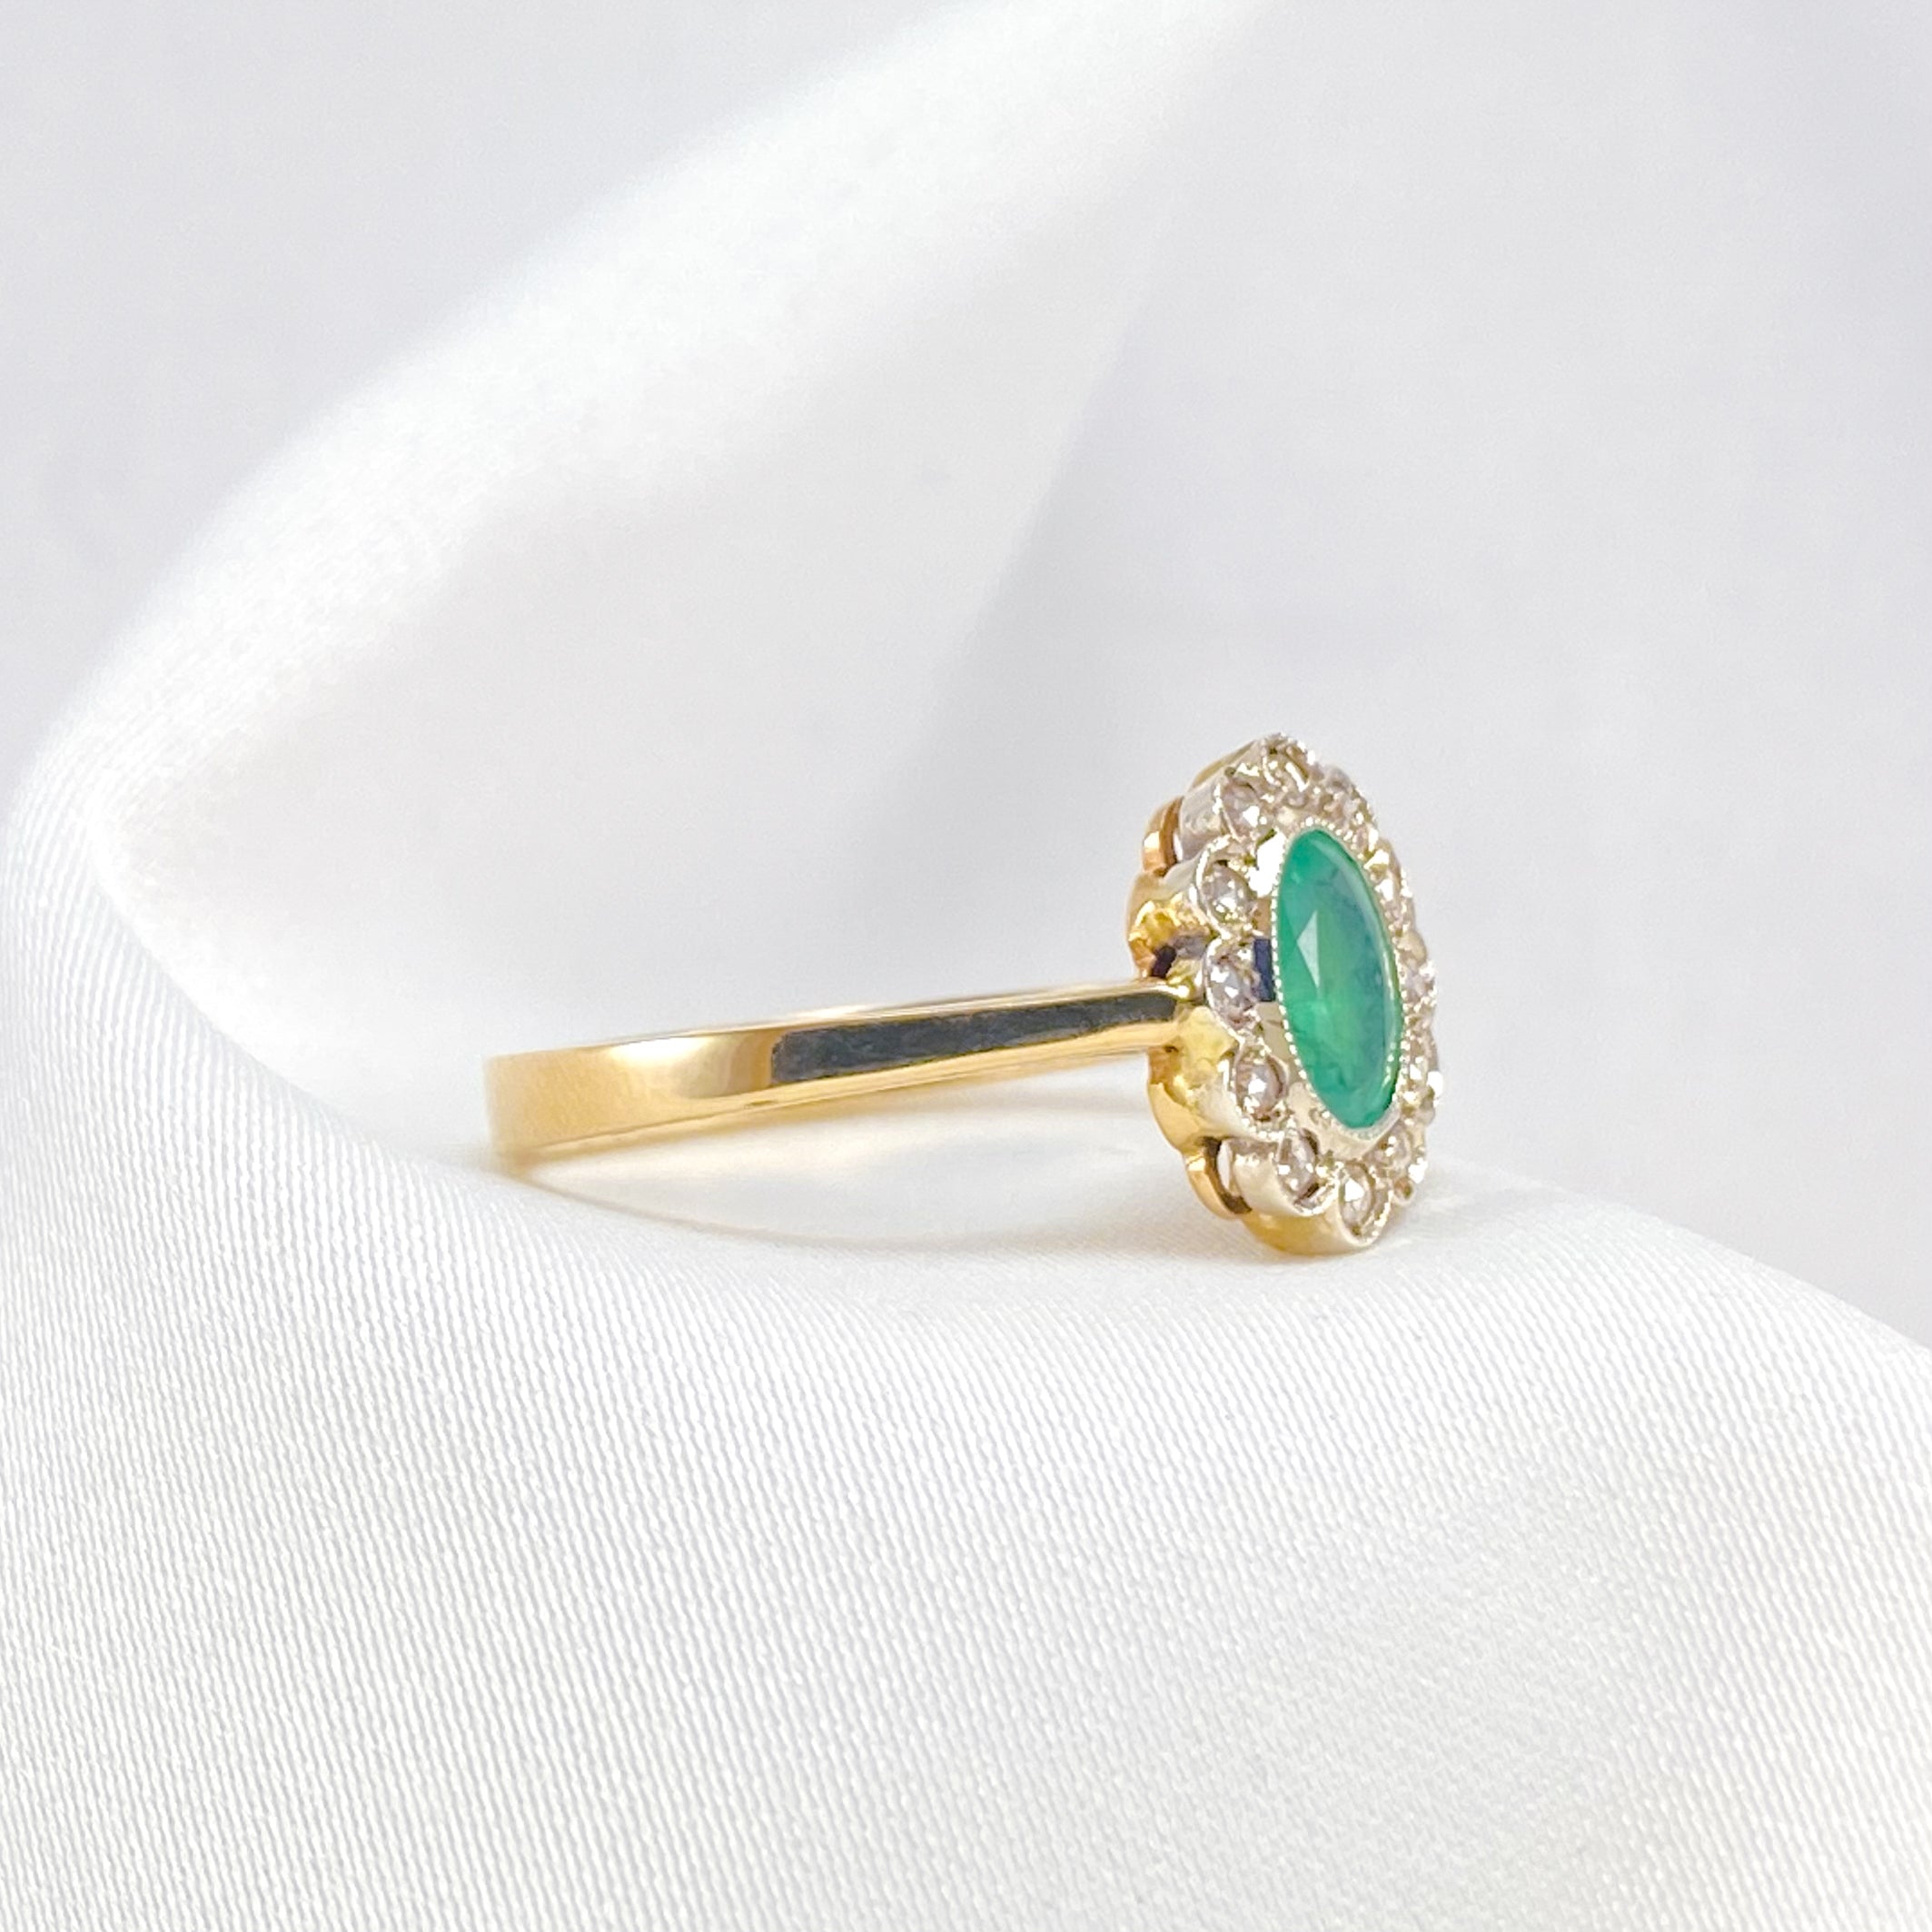 Emerald & Diamond Flower Ring